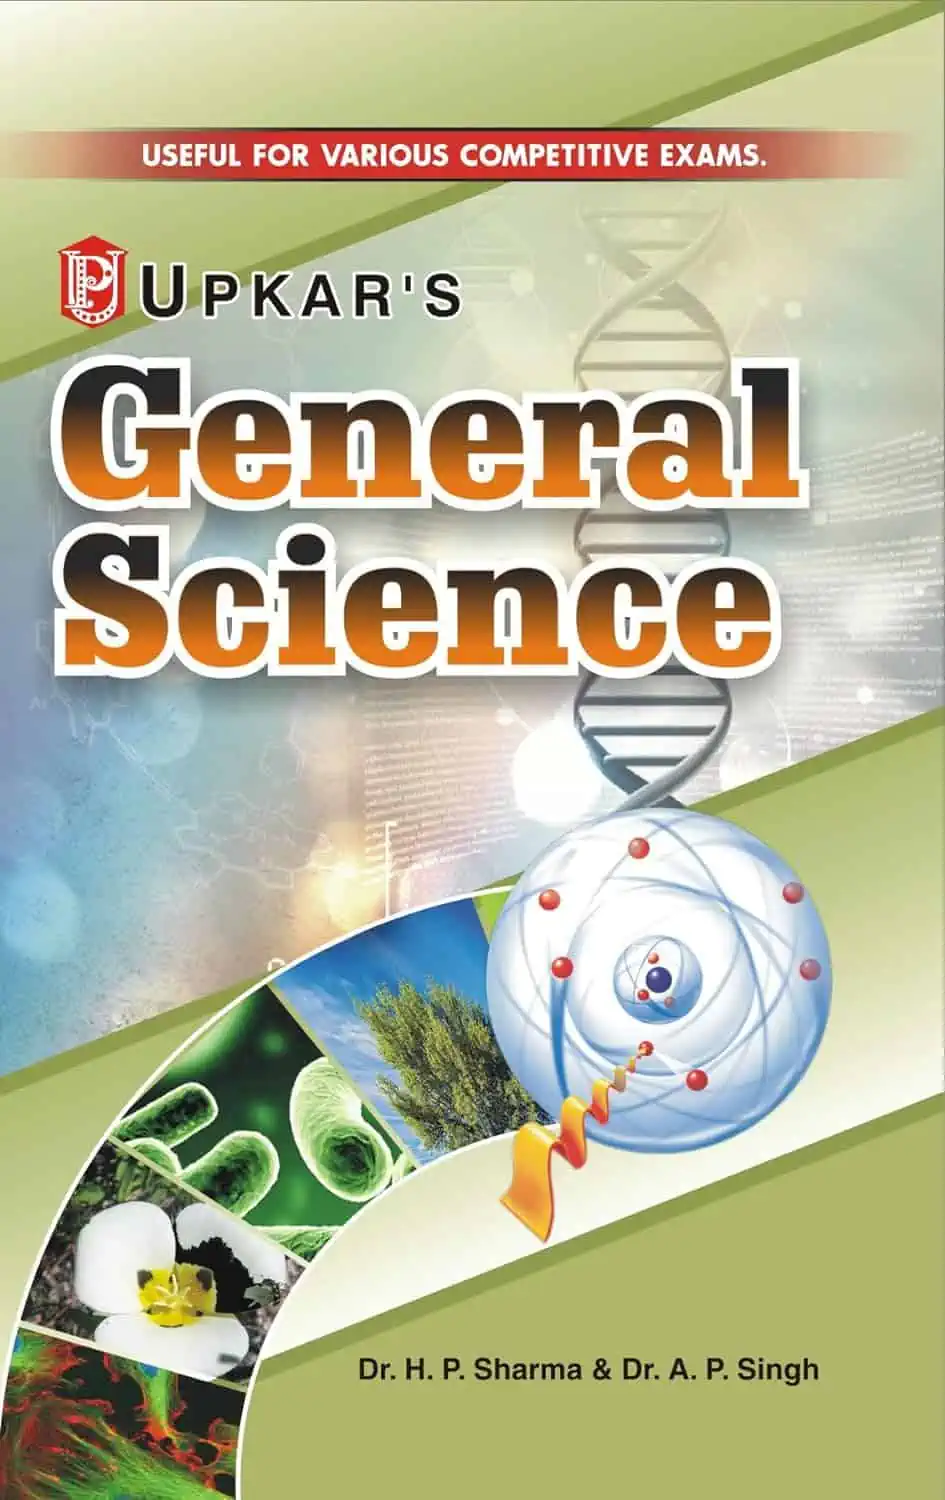 Upkar's General Science PDF